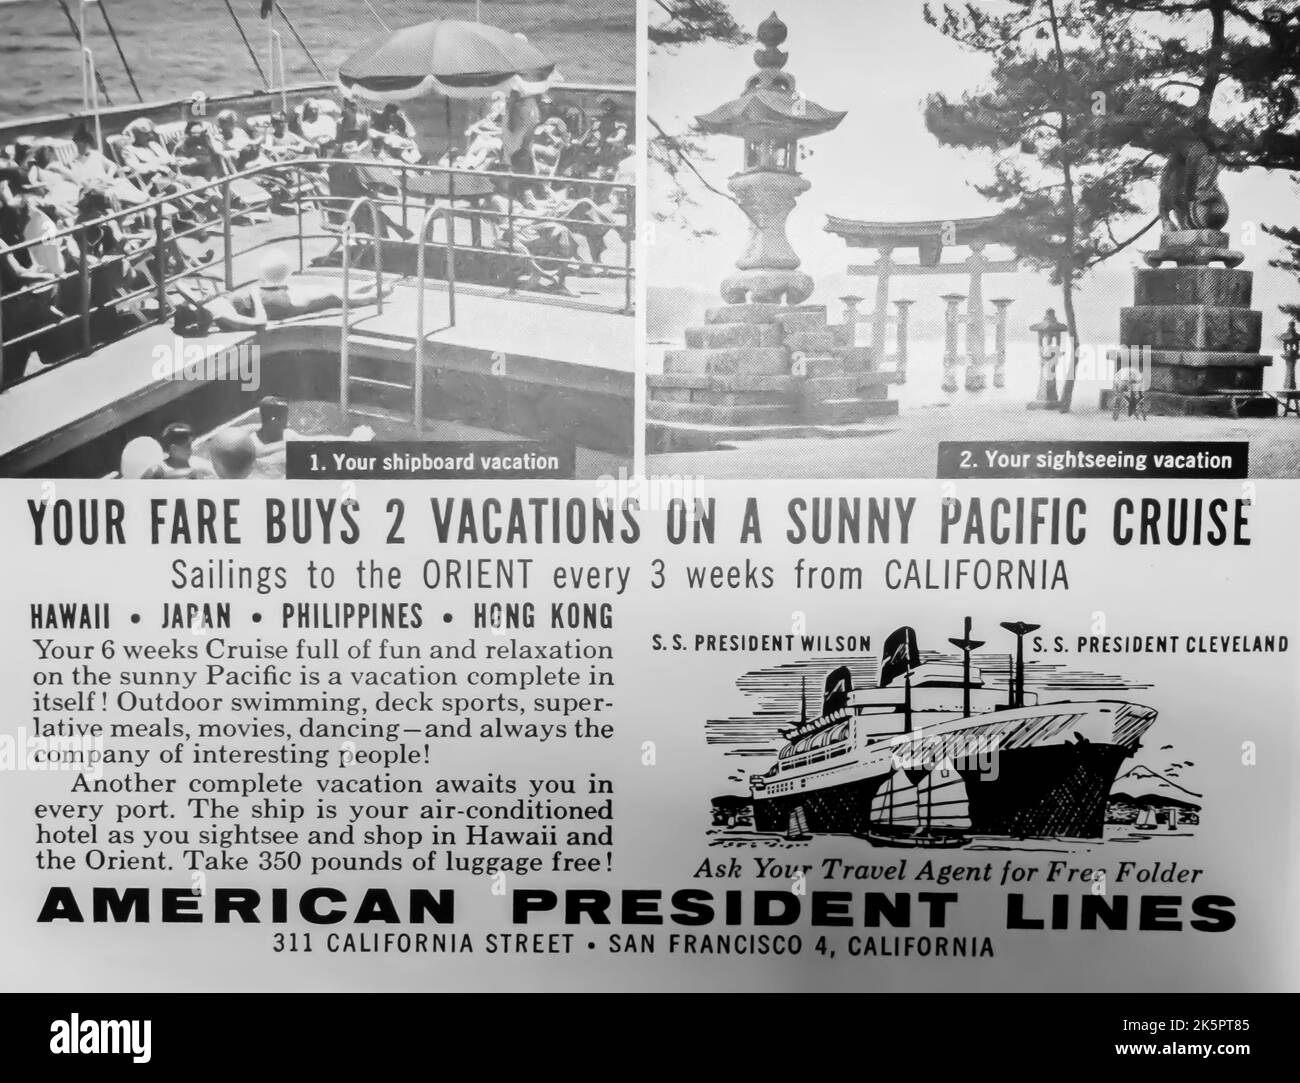 American President Lines Cruise, cruises travel advertisement in NatGeo magazine, 1954 Stock Photo